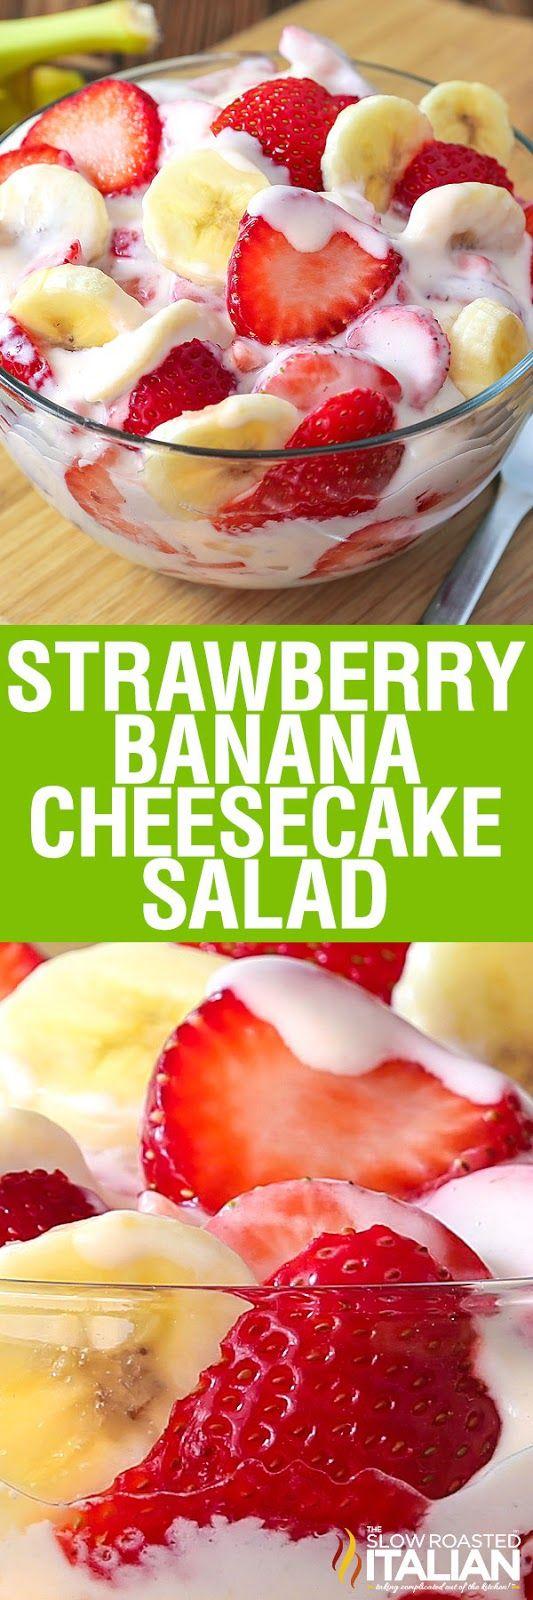 Hochzeit - Strawberry Banana Cheesecake Salad